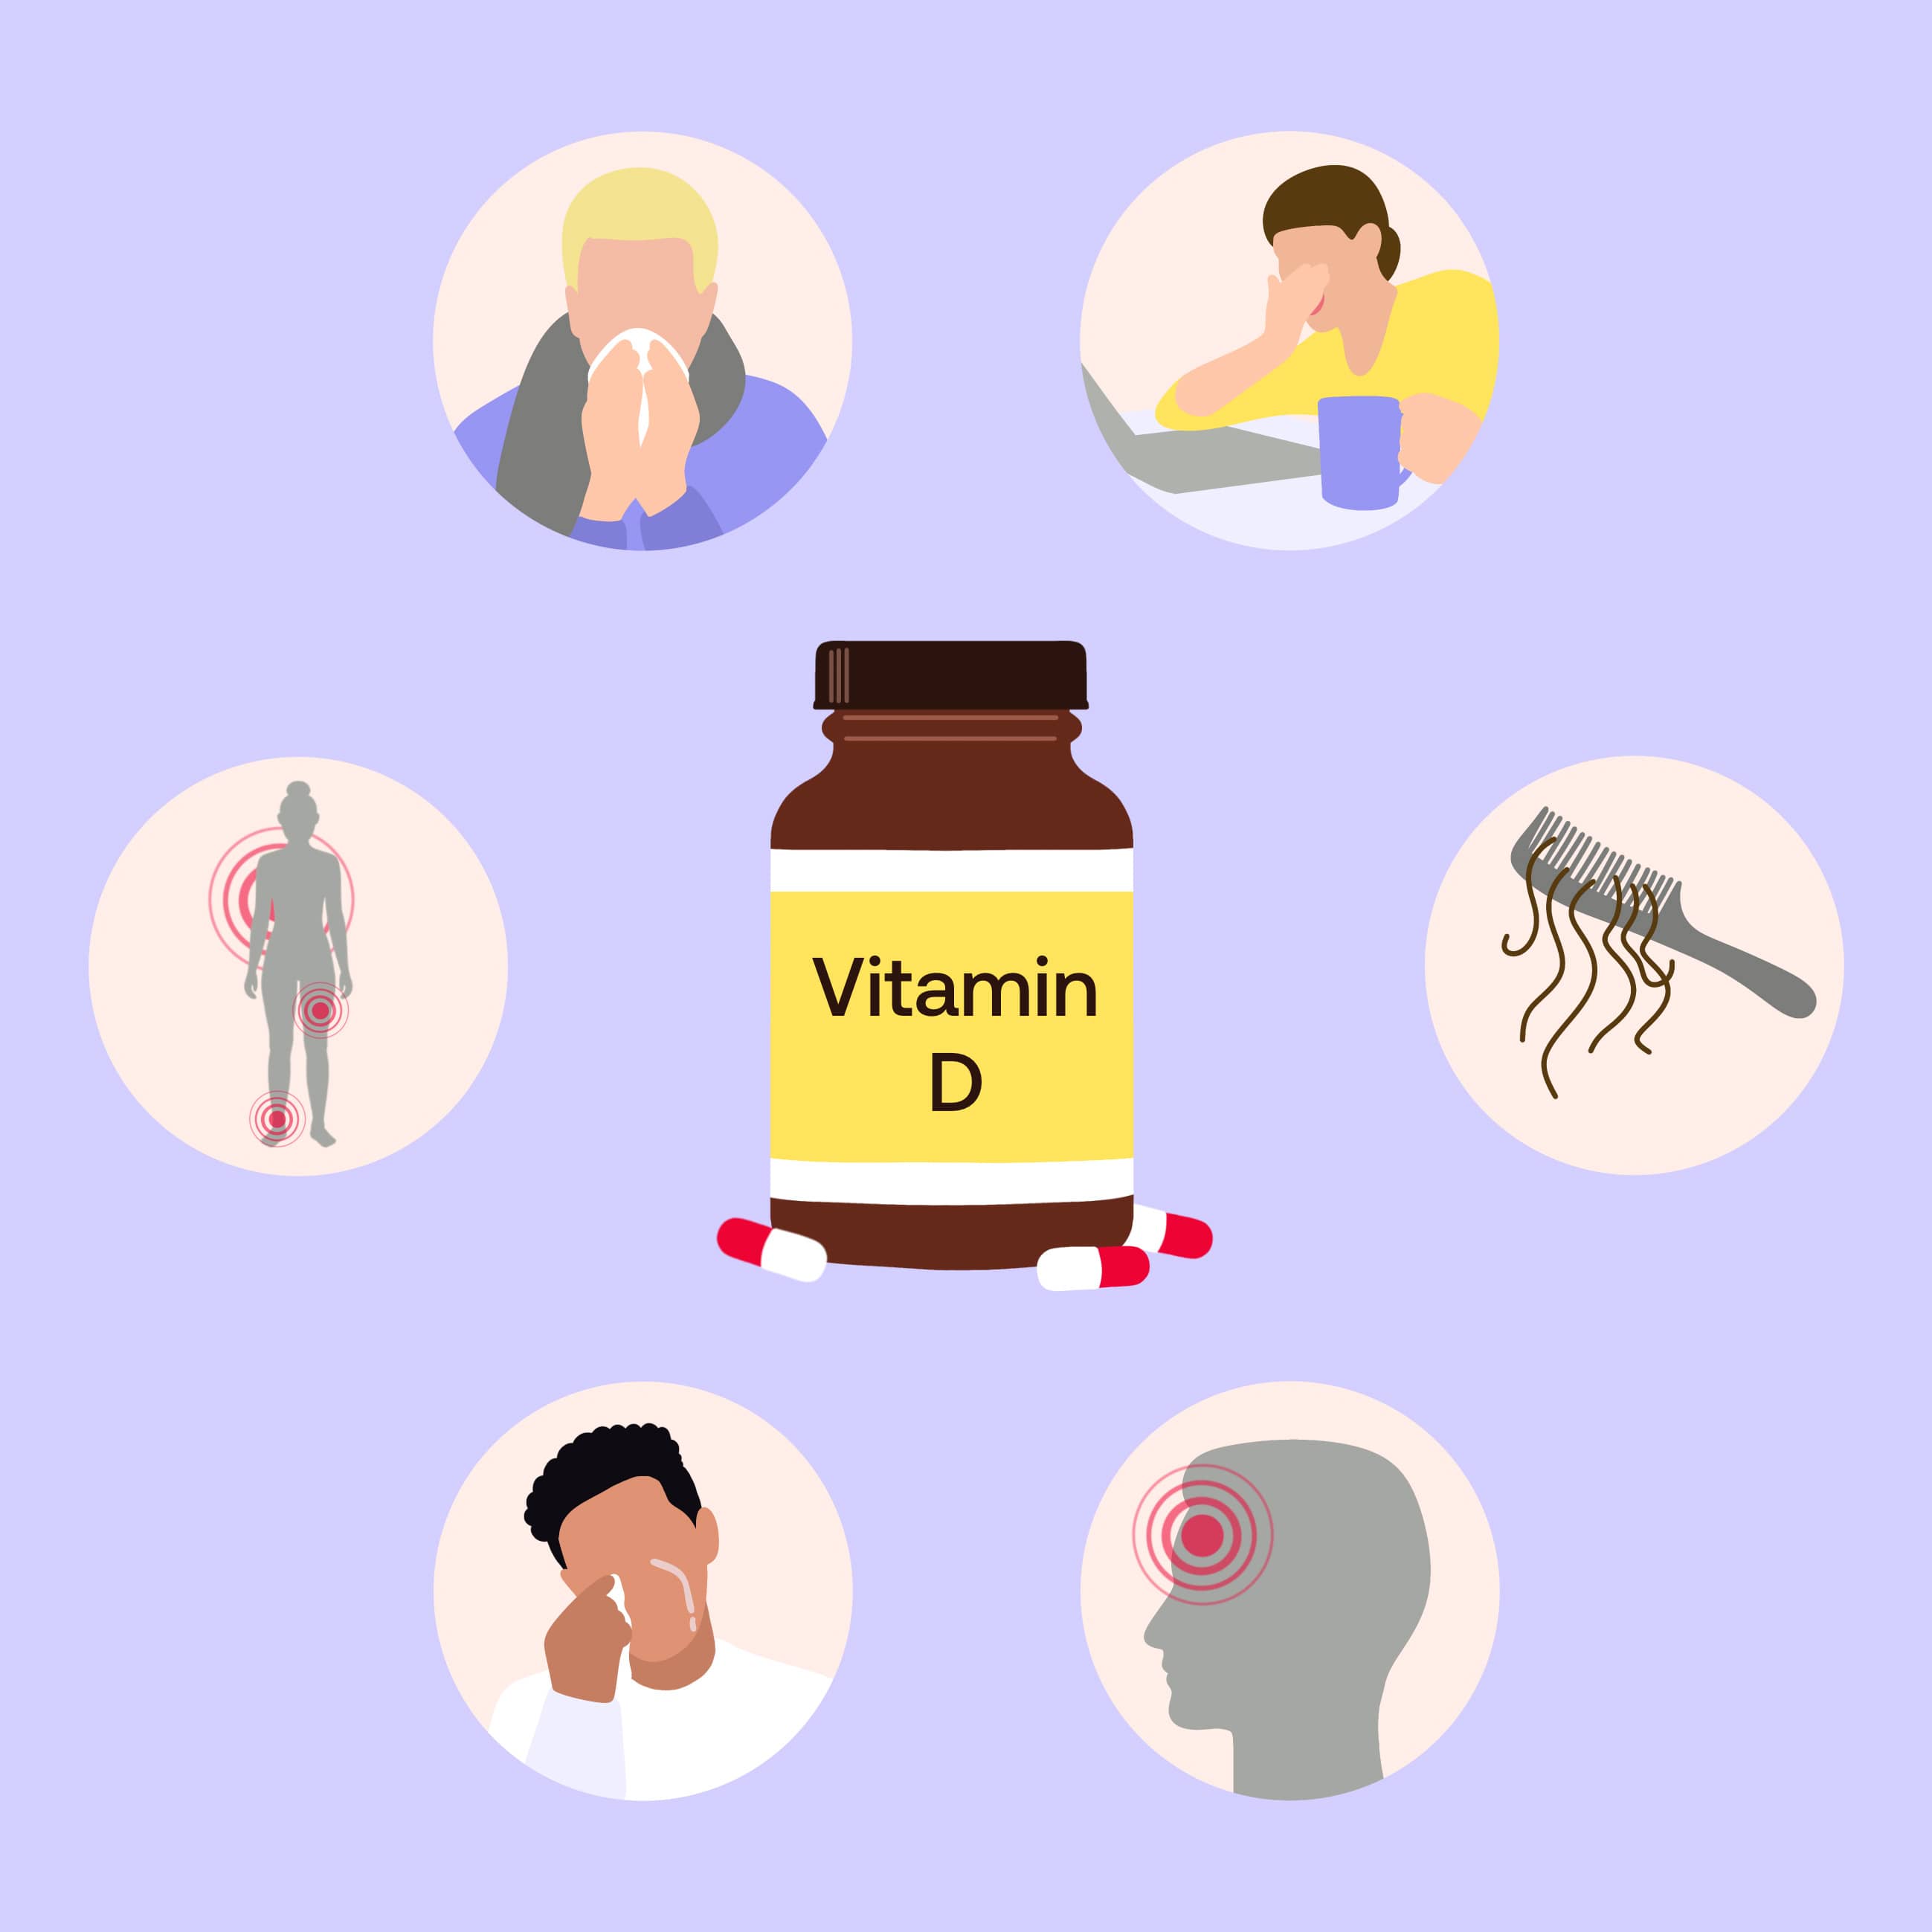 vitamin d mangel symptome